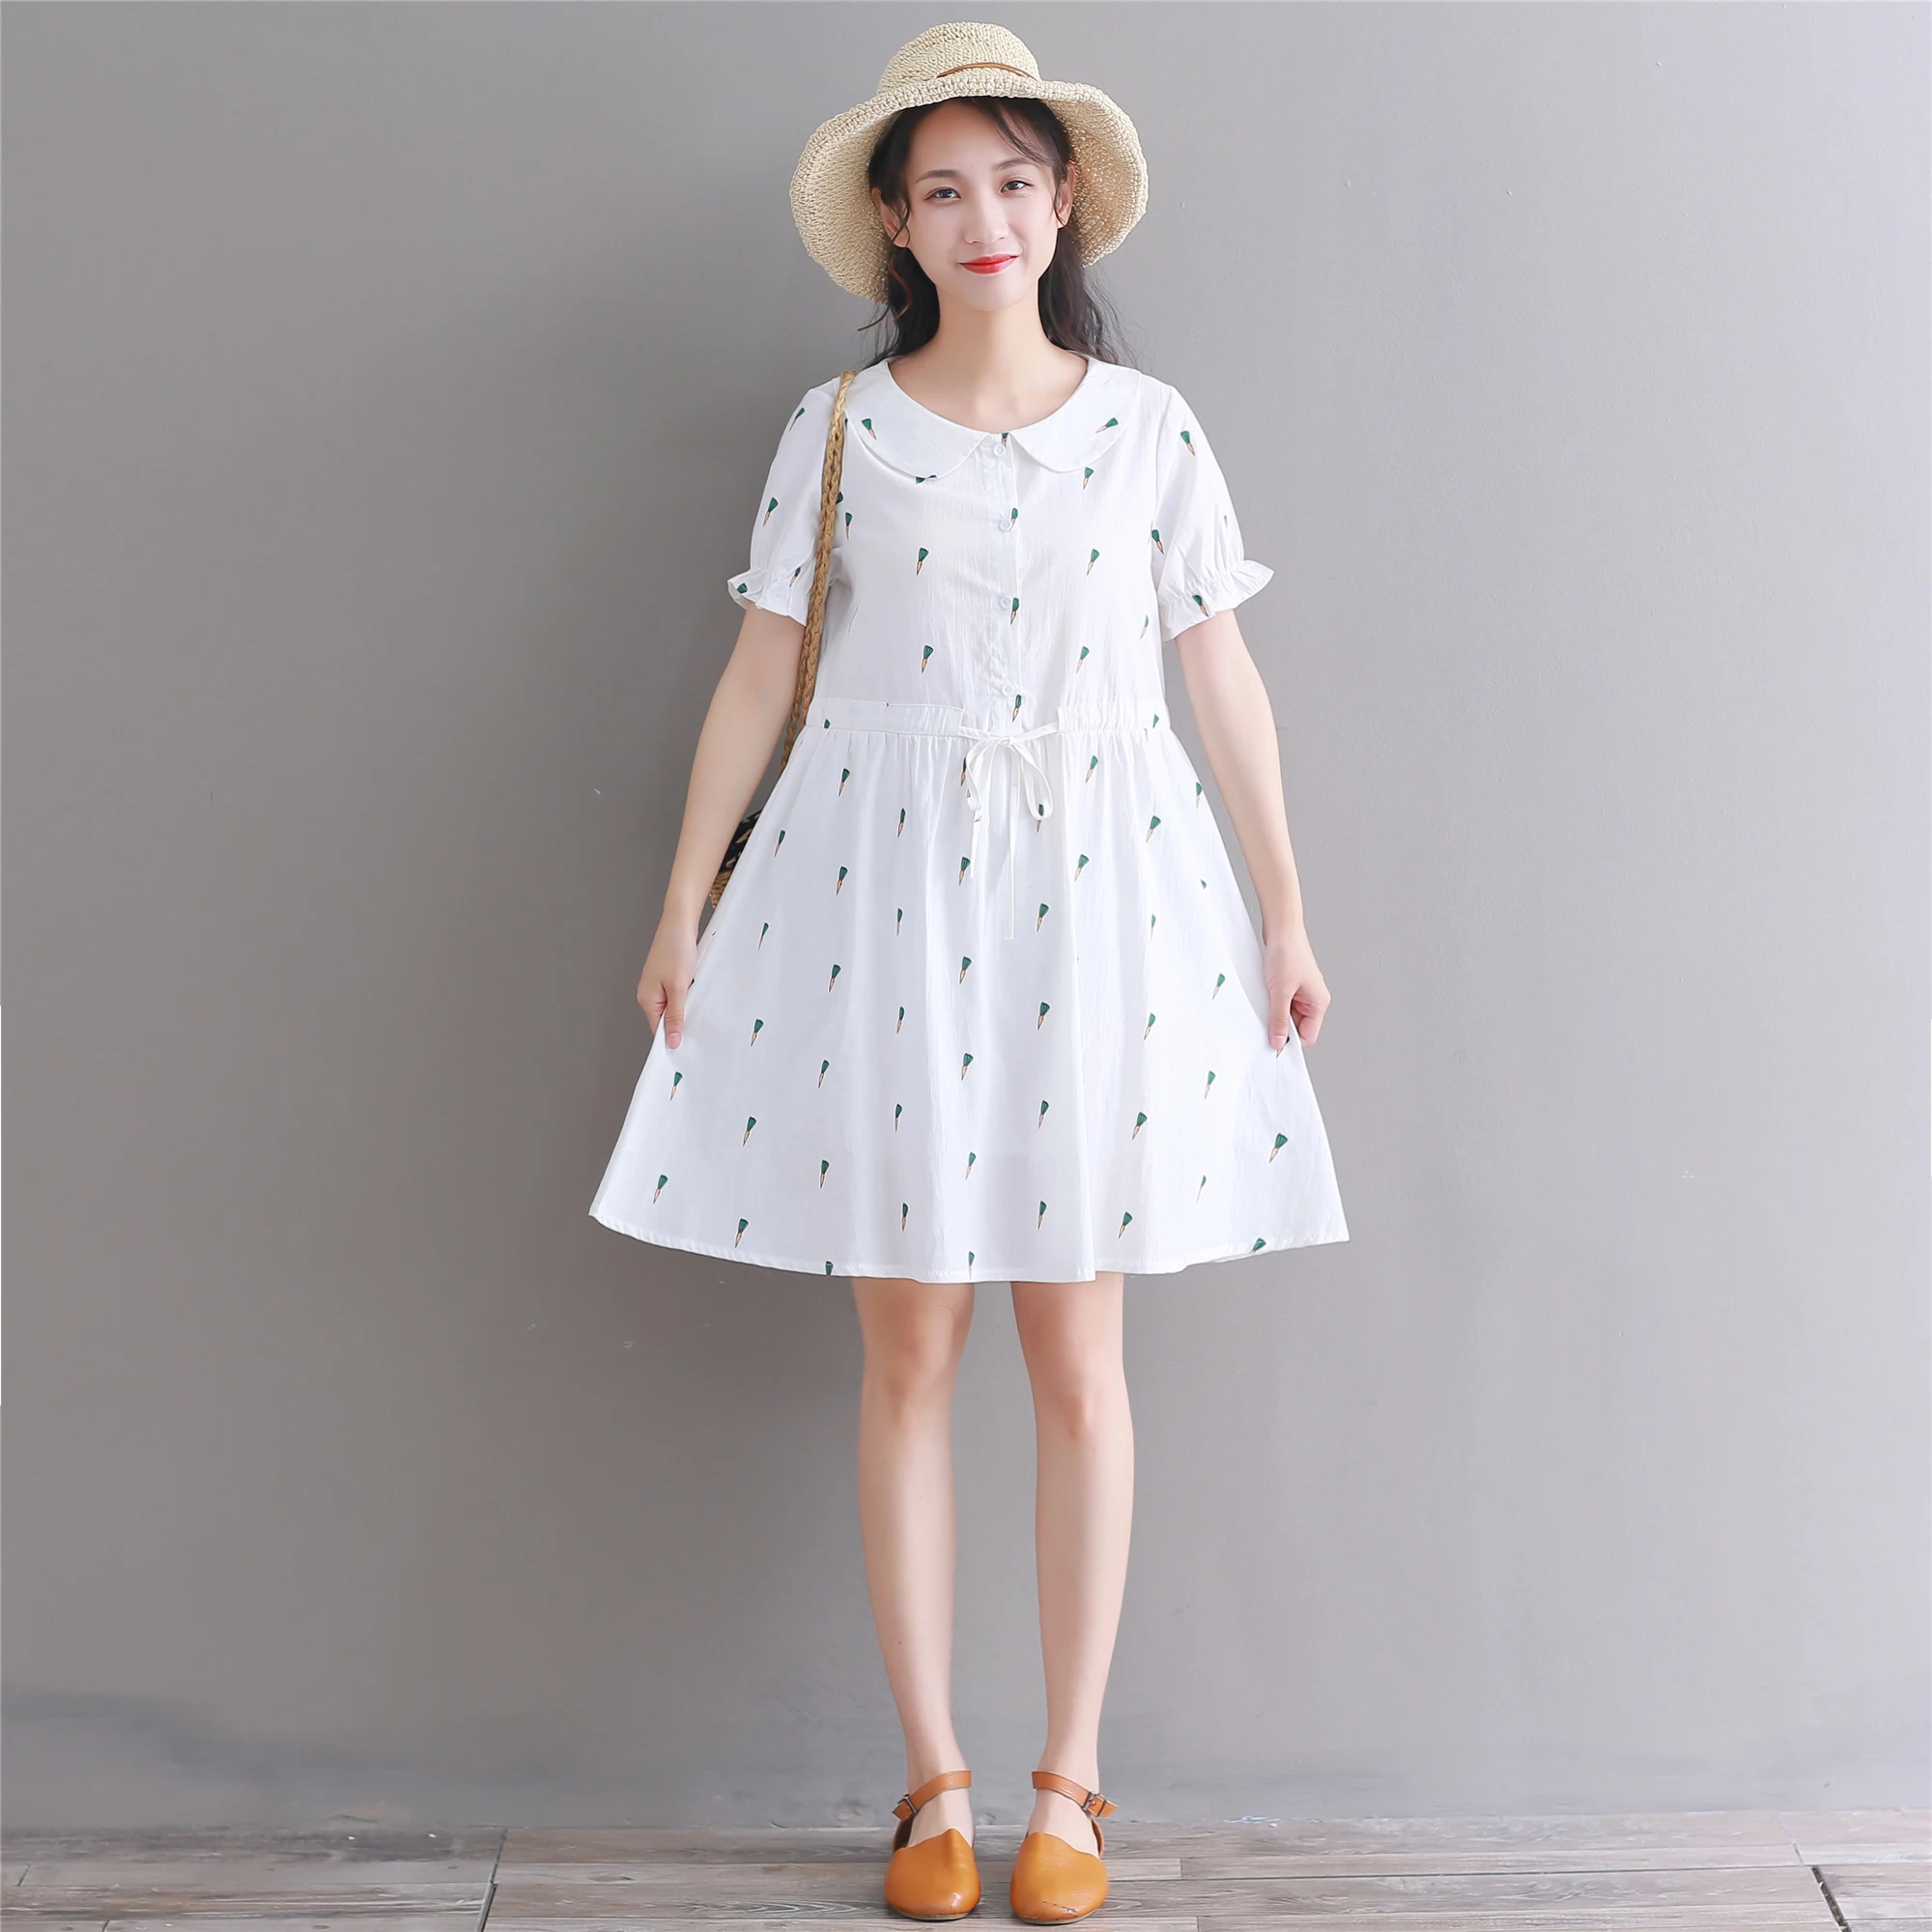 Mori girl cute sweet dress 2019 summer new fashion peter pan collar carrot print cotton a-line kawaii girl vestidos